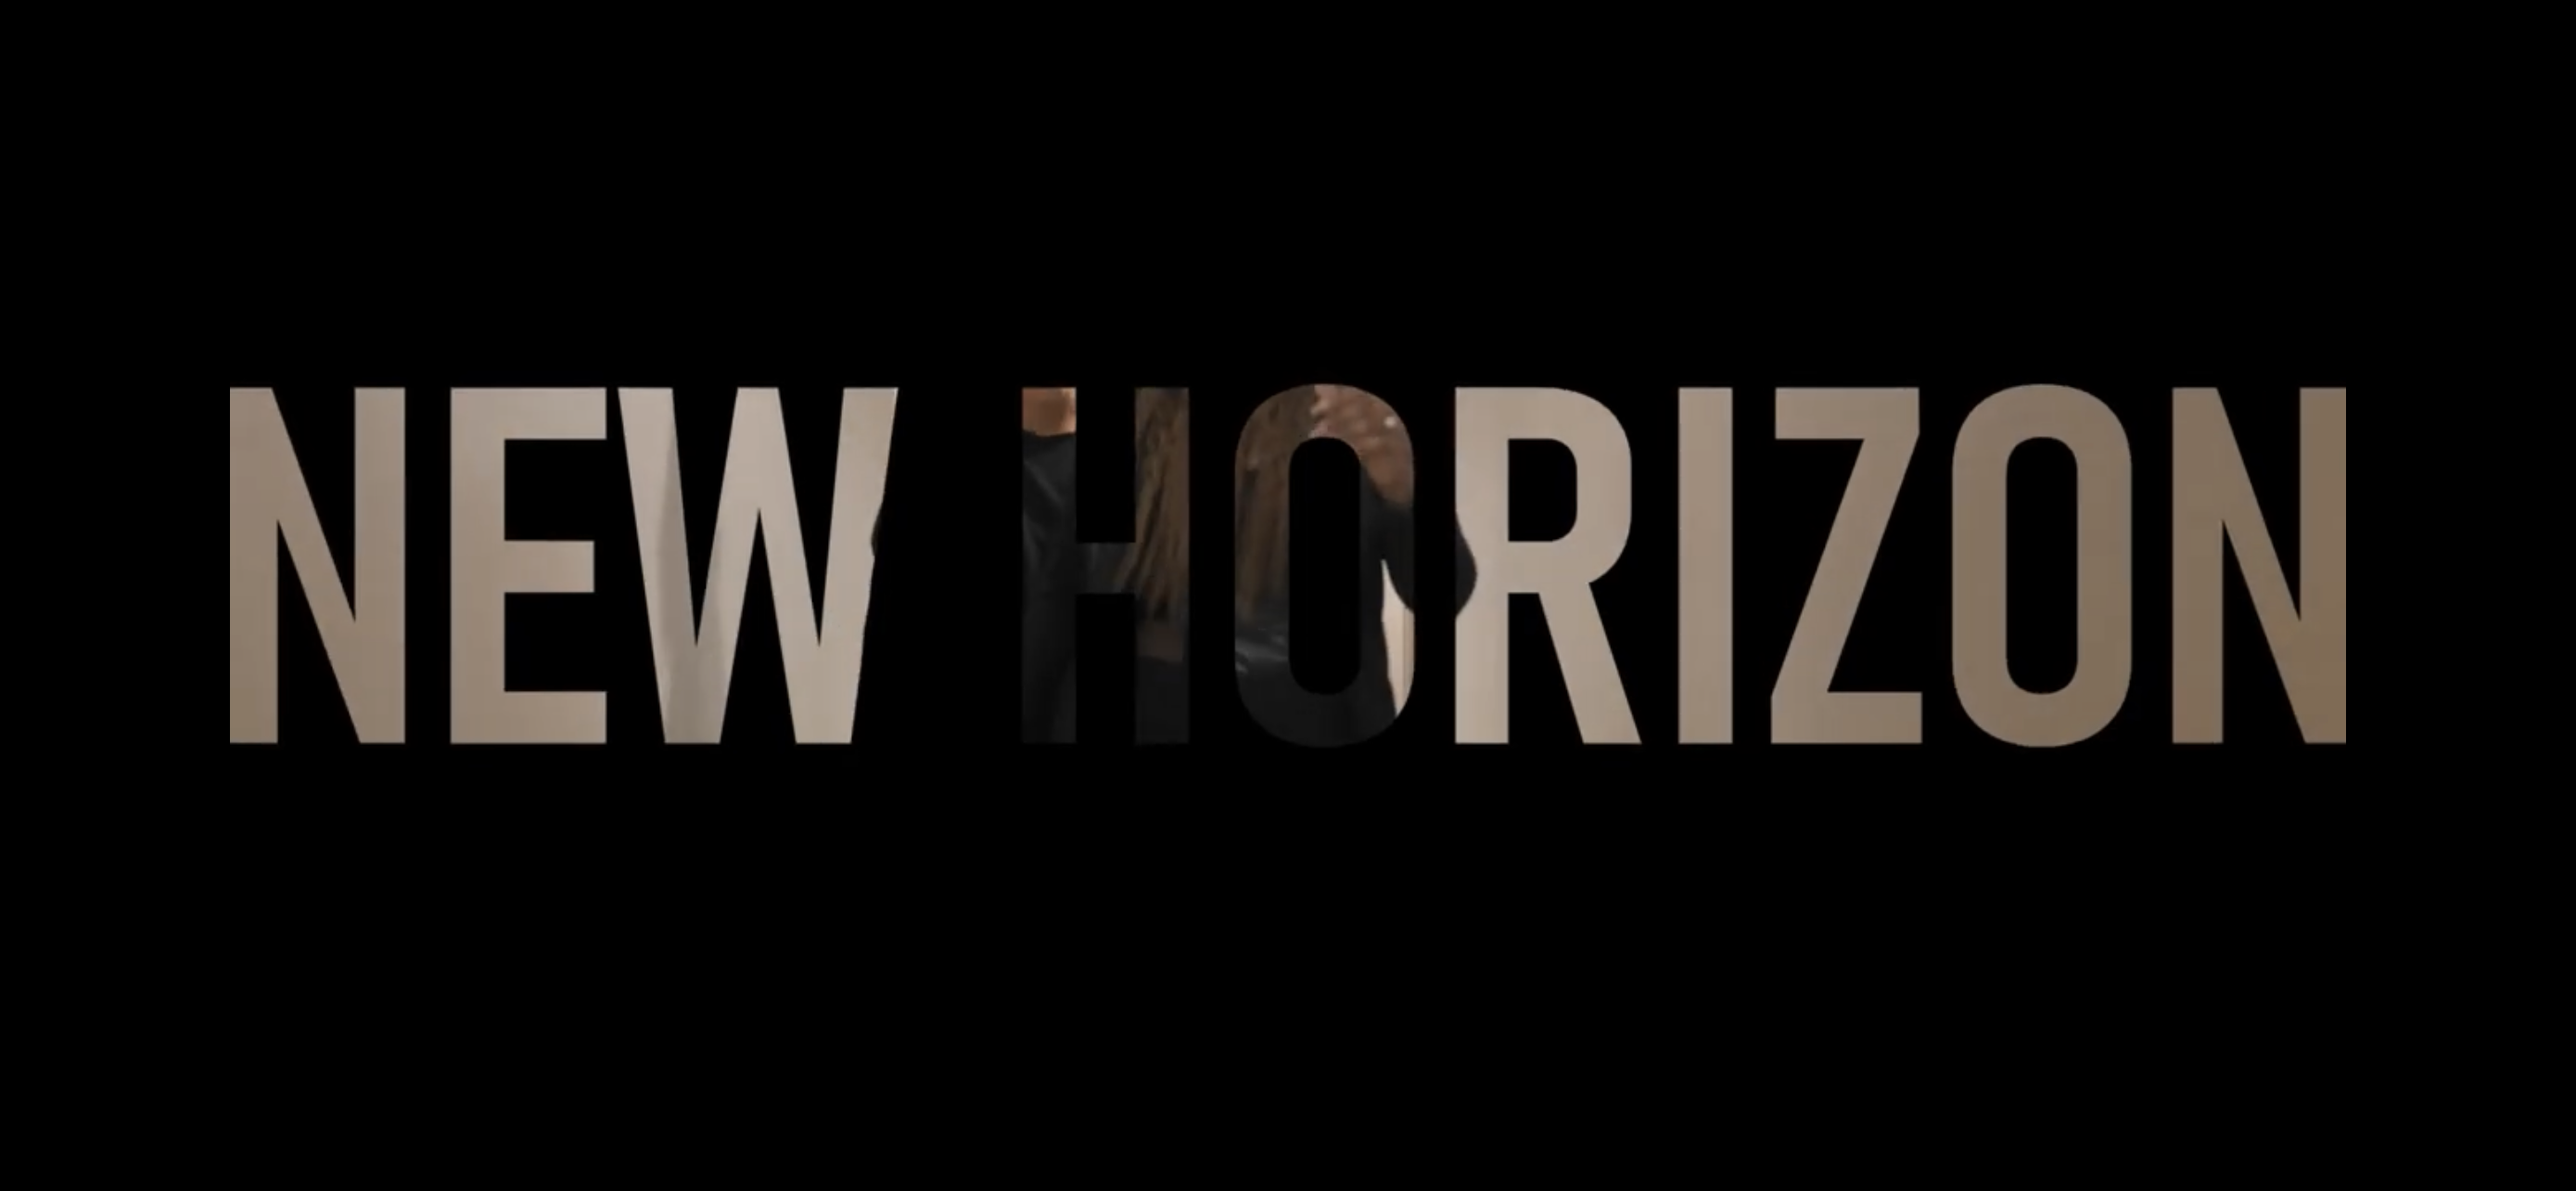 ADST Music - New Horizon (feat. Devin Mesinna)